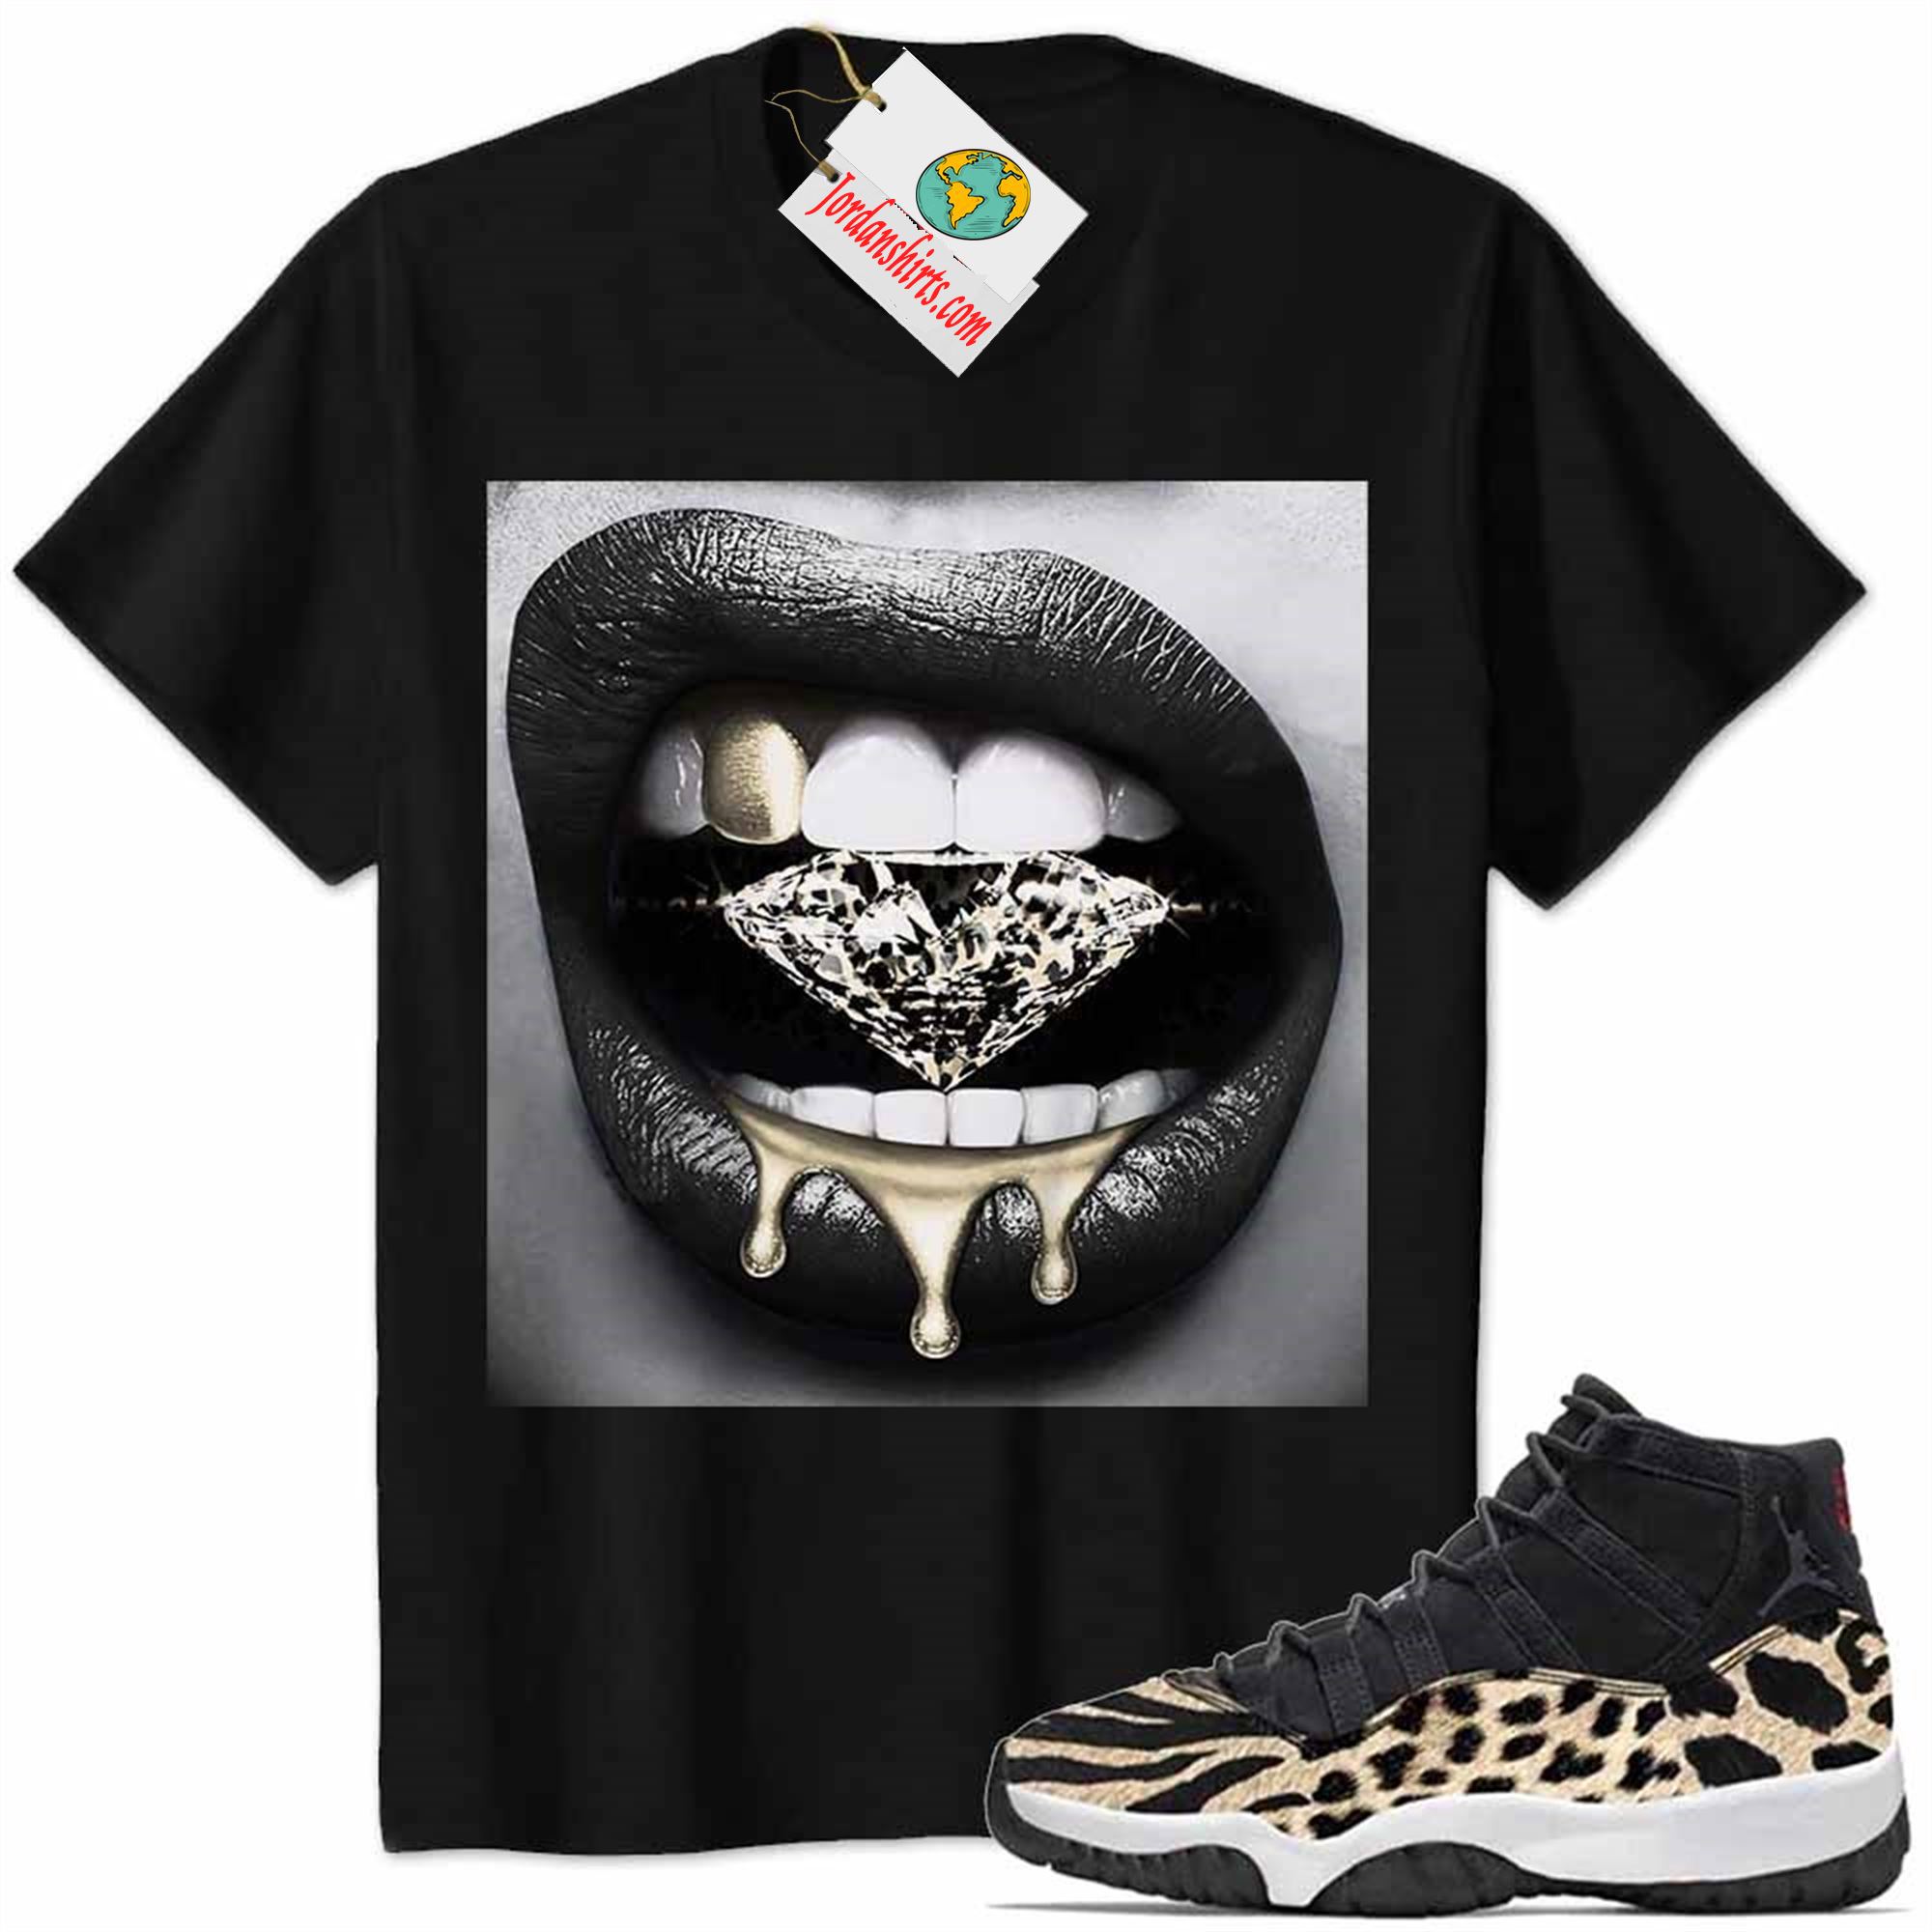 Jordan 11 Shirt, Jordan 11 Animal Print Shirt Sexy Lip Bite Diamond Dripping Black Size Up To 5xl